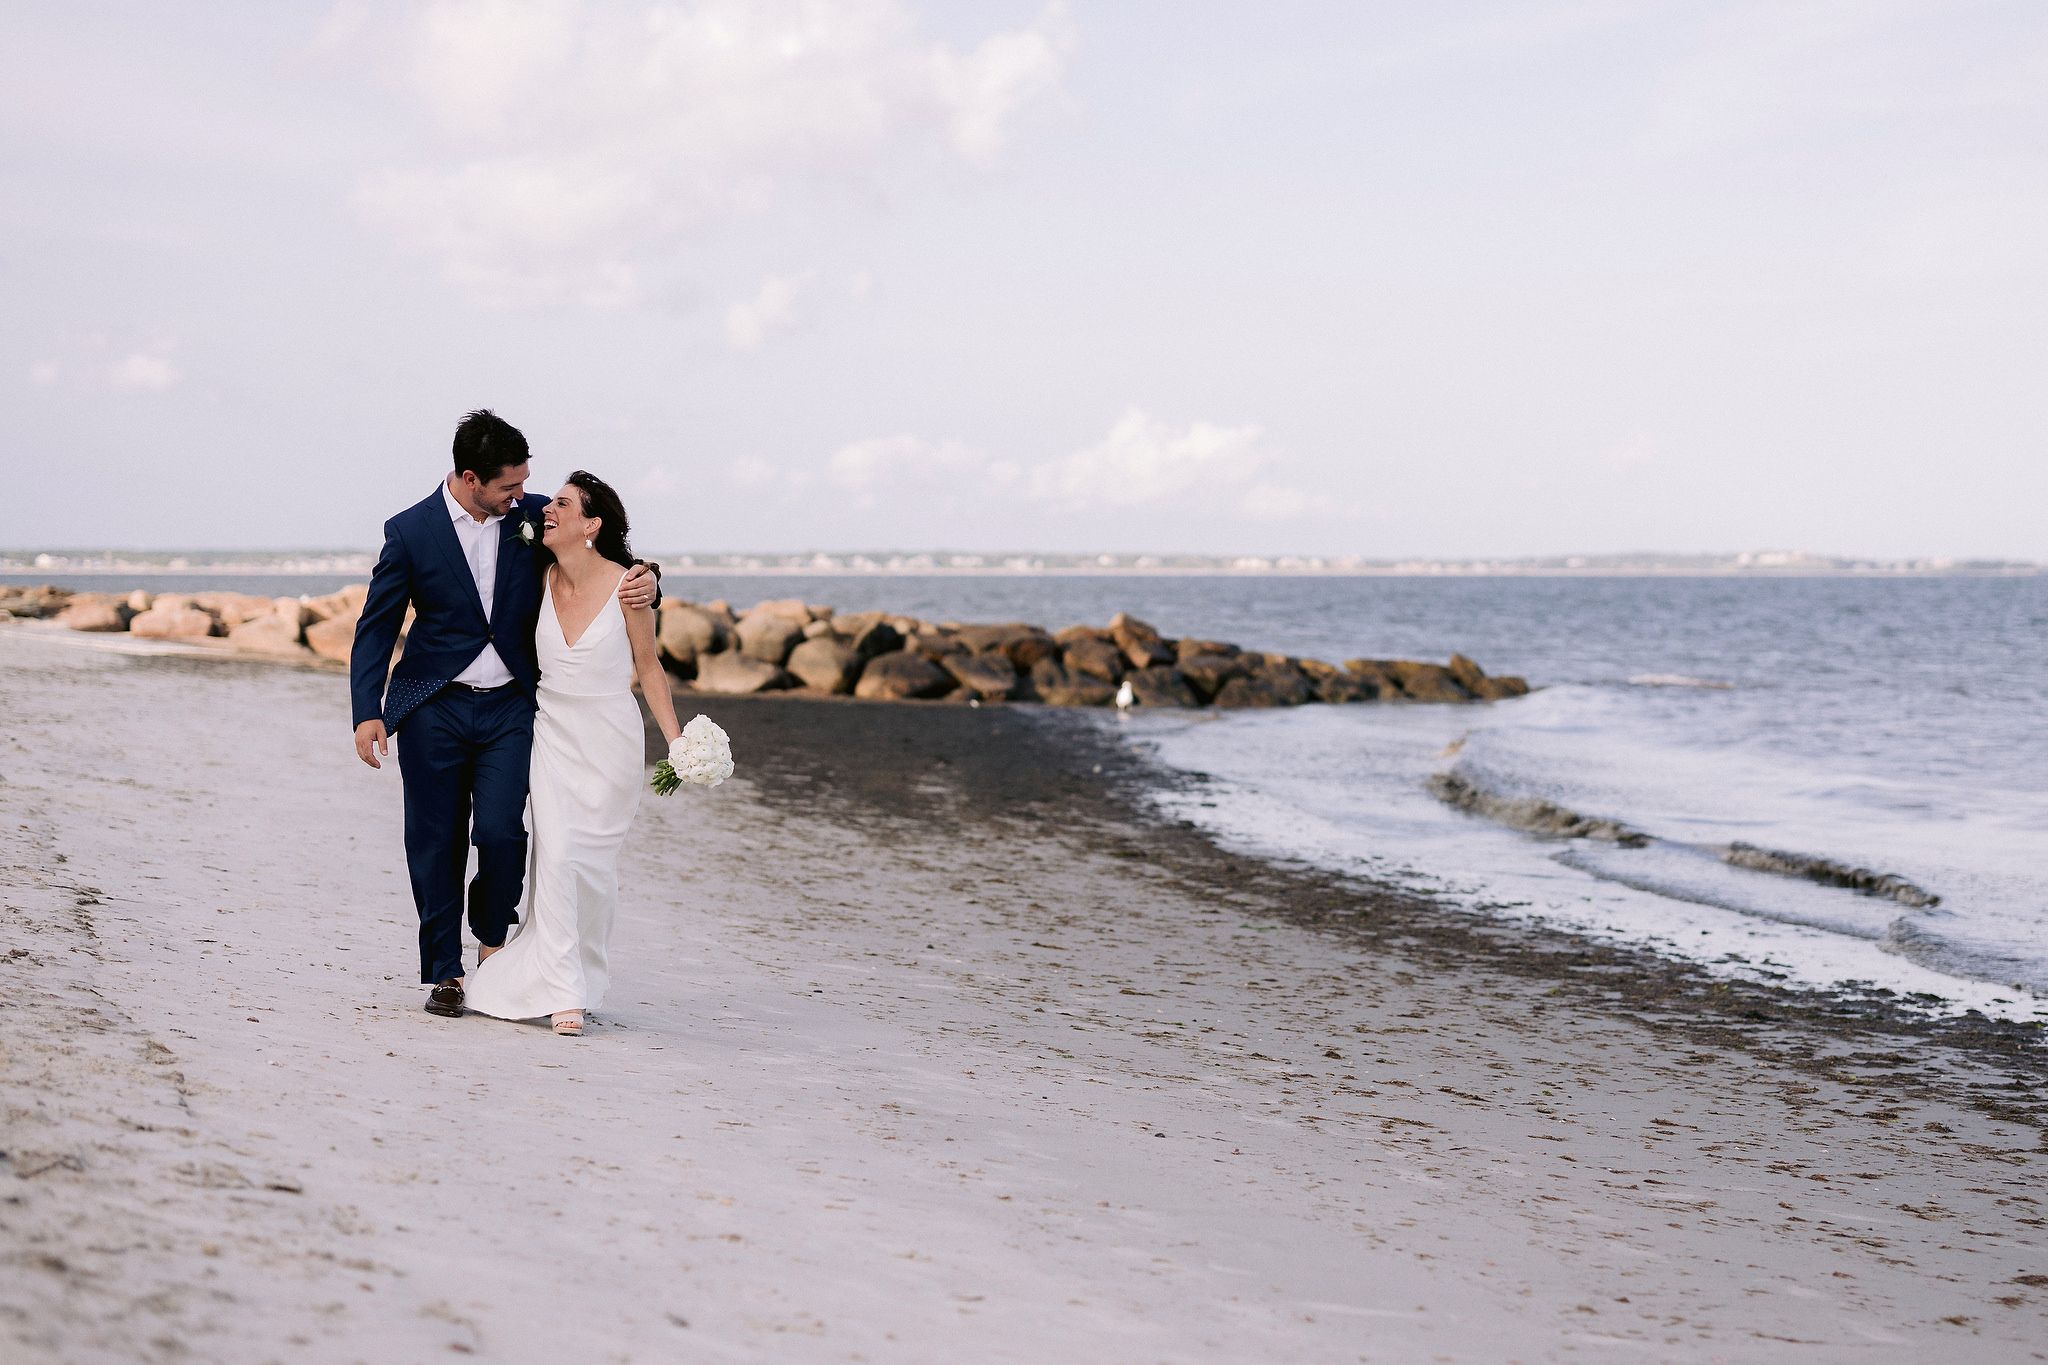 The couple are walking happily on the seashore. Wianno Club, Cape Cod, Osterville, MA Beach wedding venue image by Jenny Fu Studio